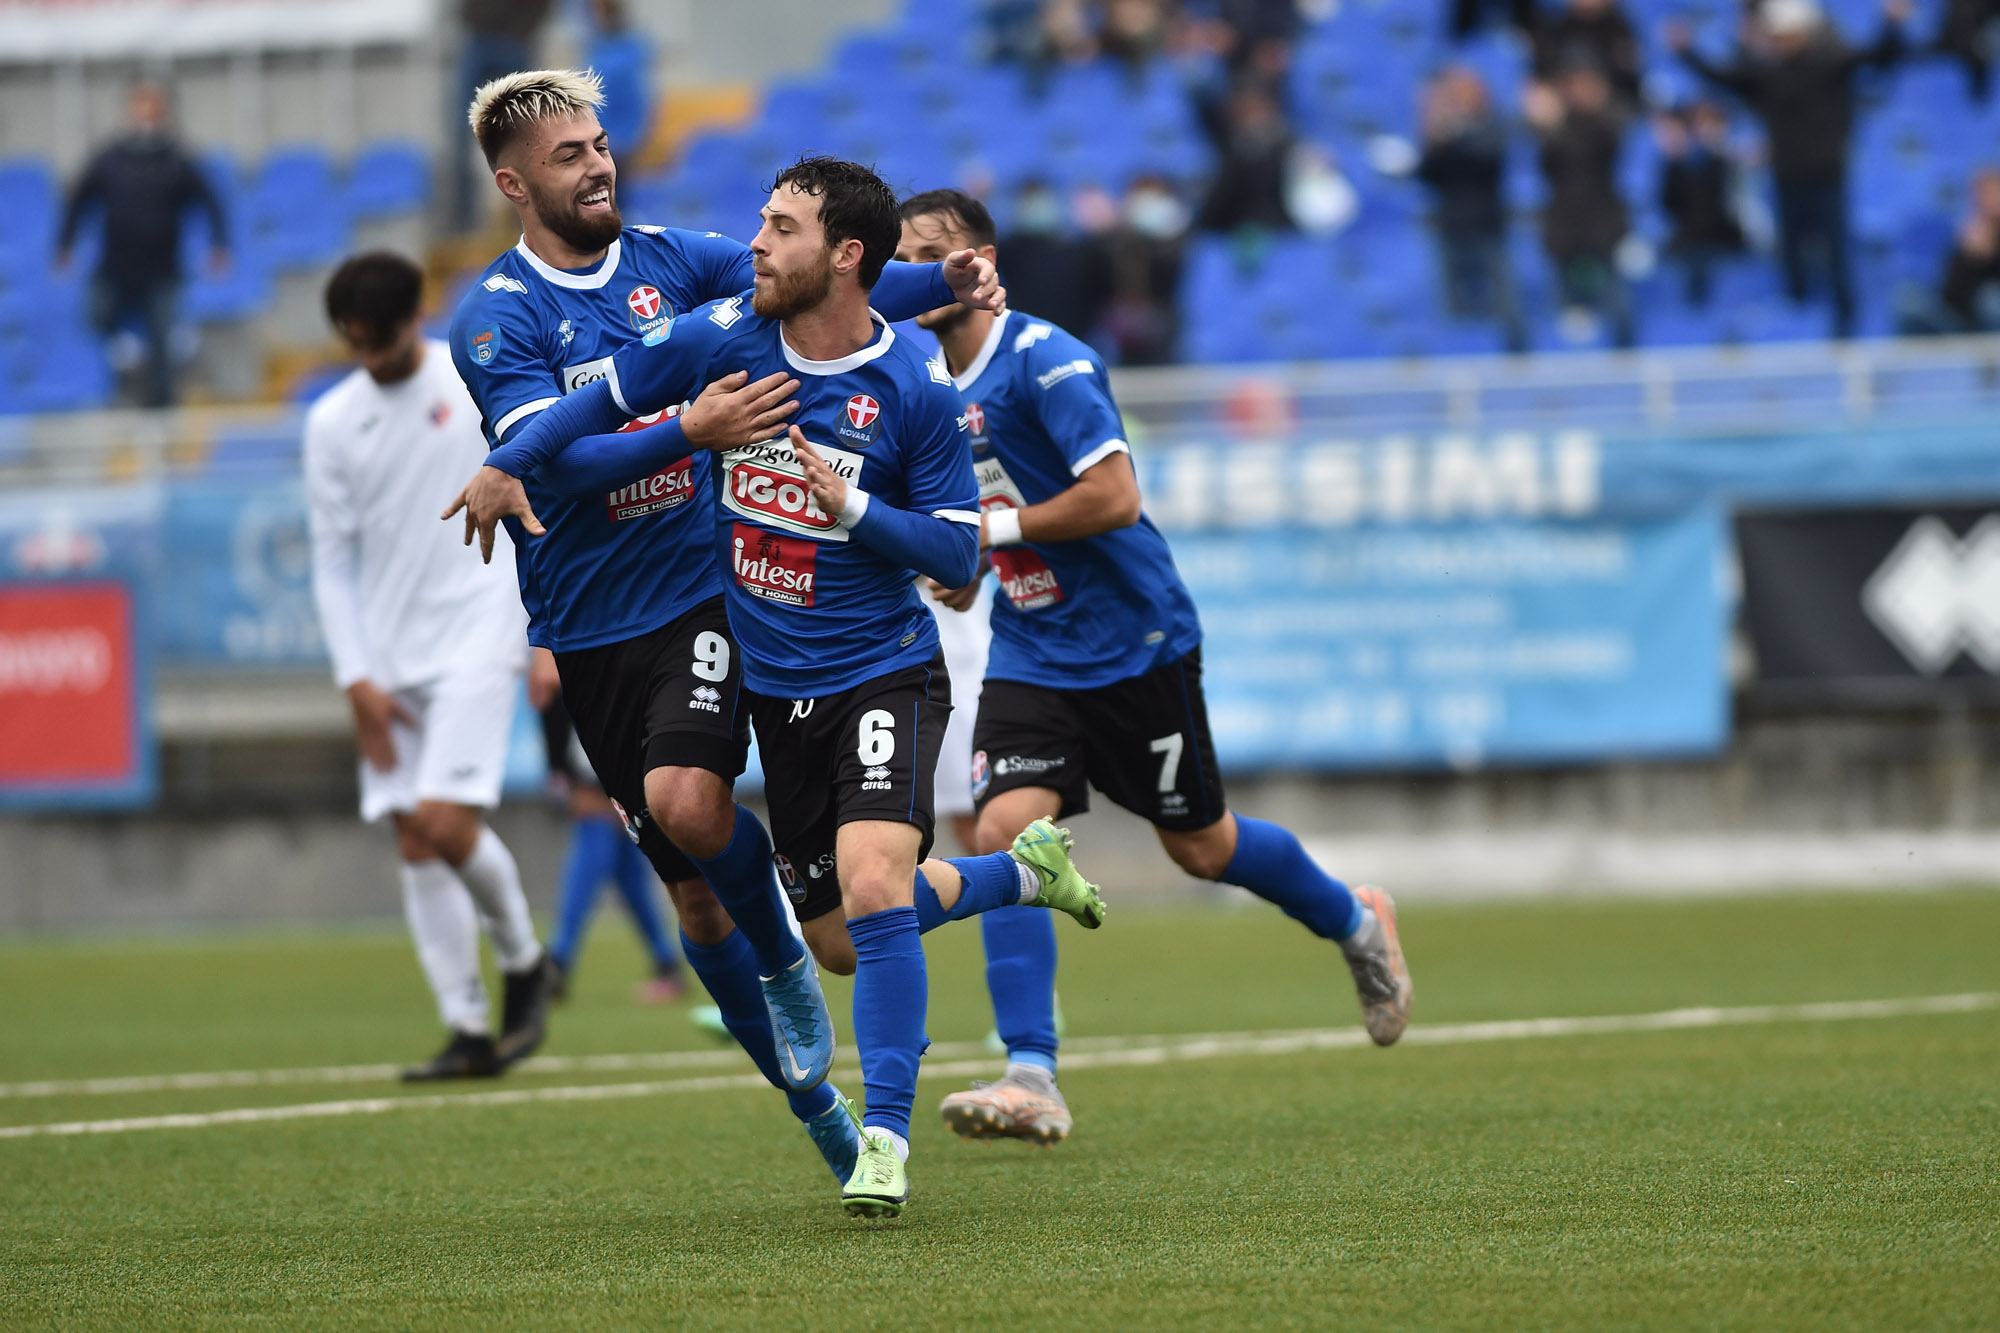 Read more about the article Novara-Vado 5-0 | Tabellino del match